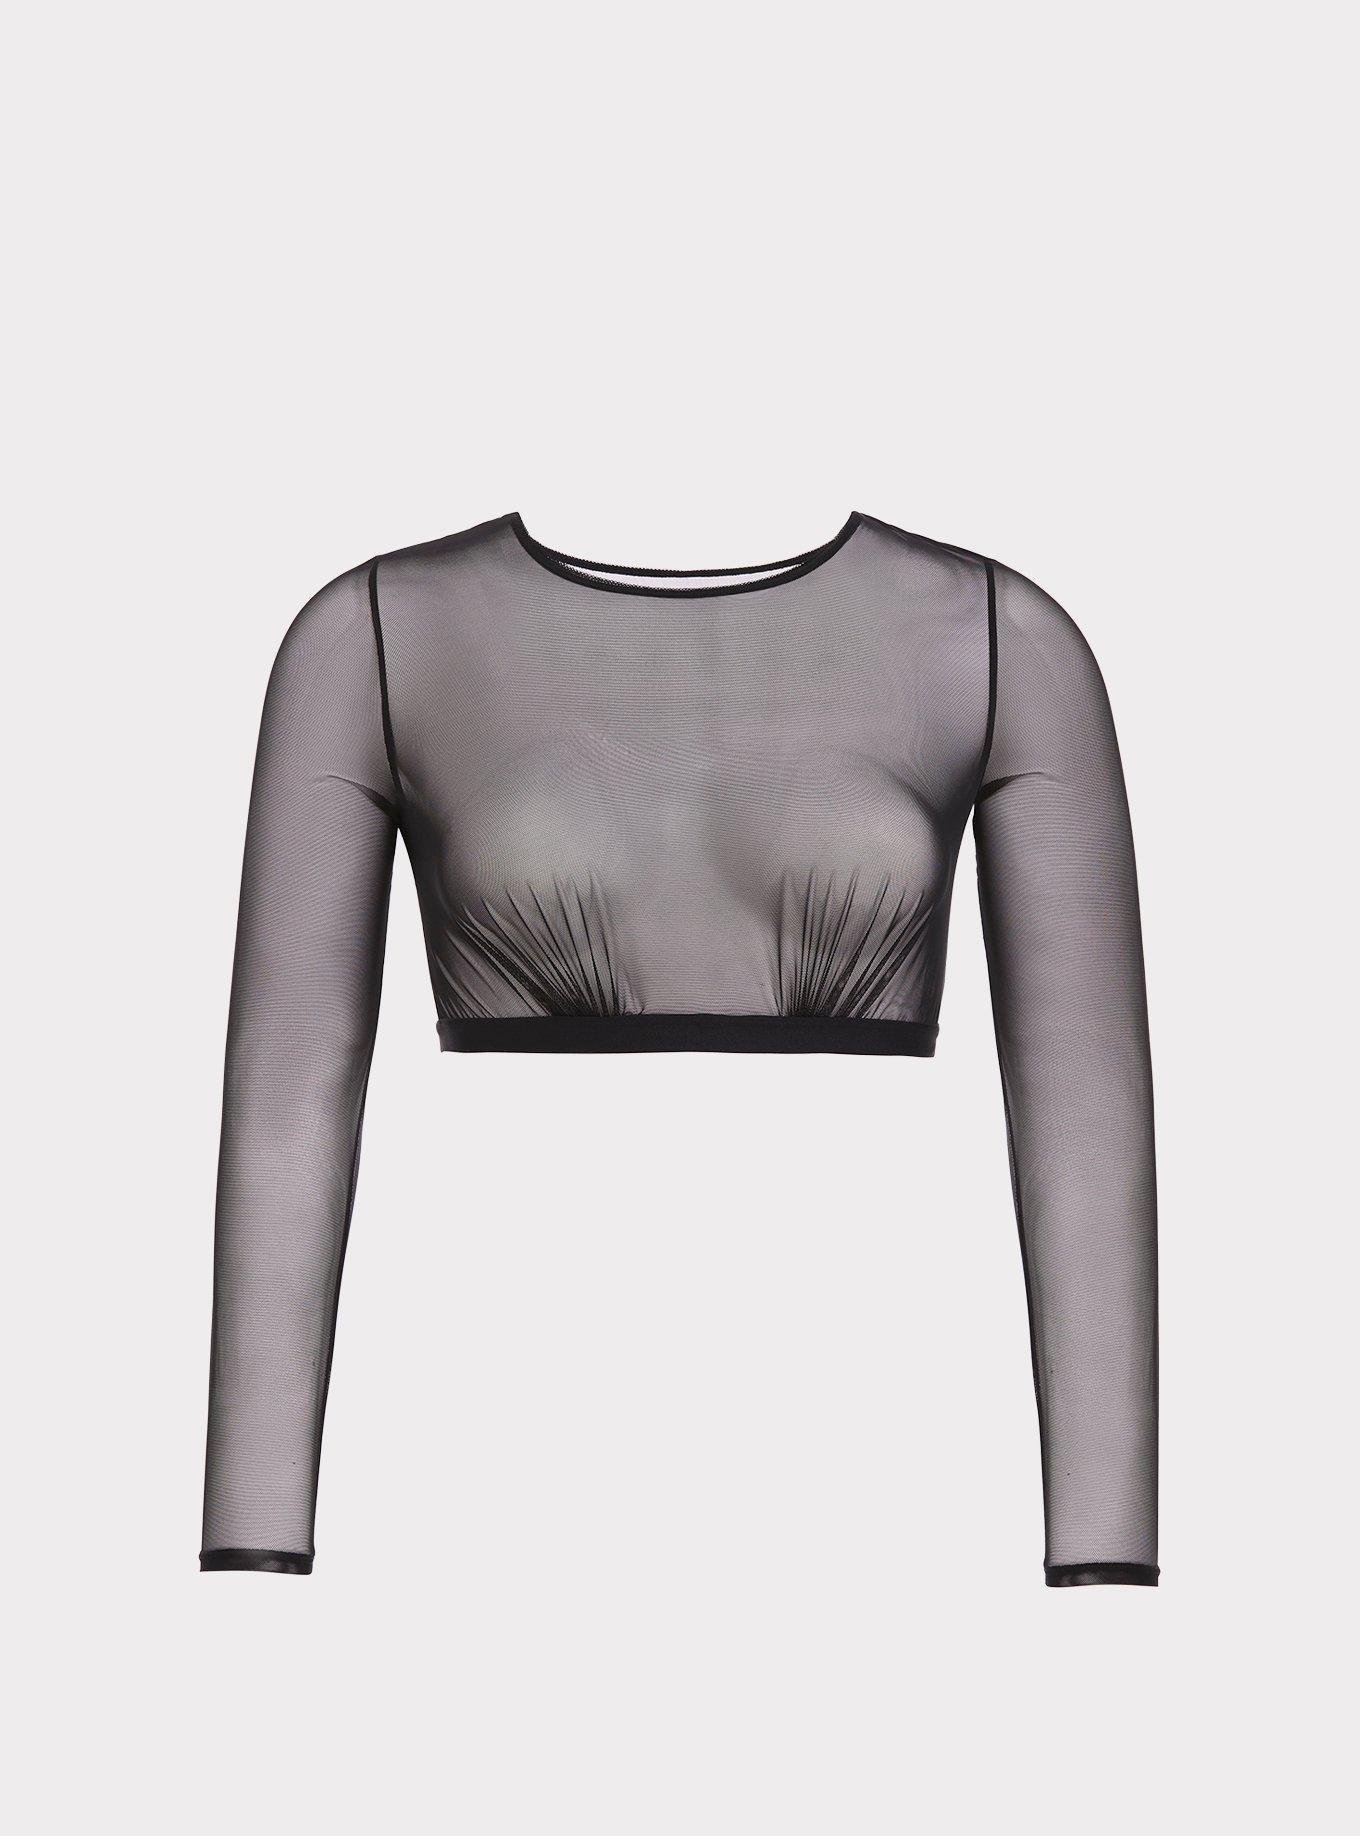 Sheer Lace Crop Top with Long Sleeves Bralet Insert in Black (£20